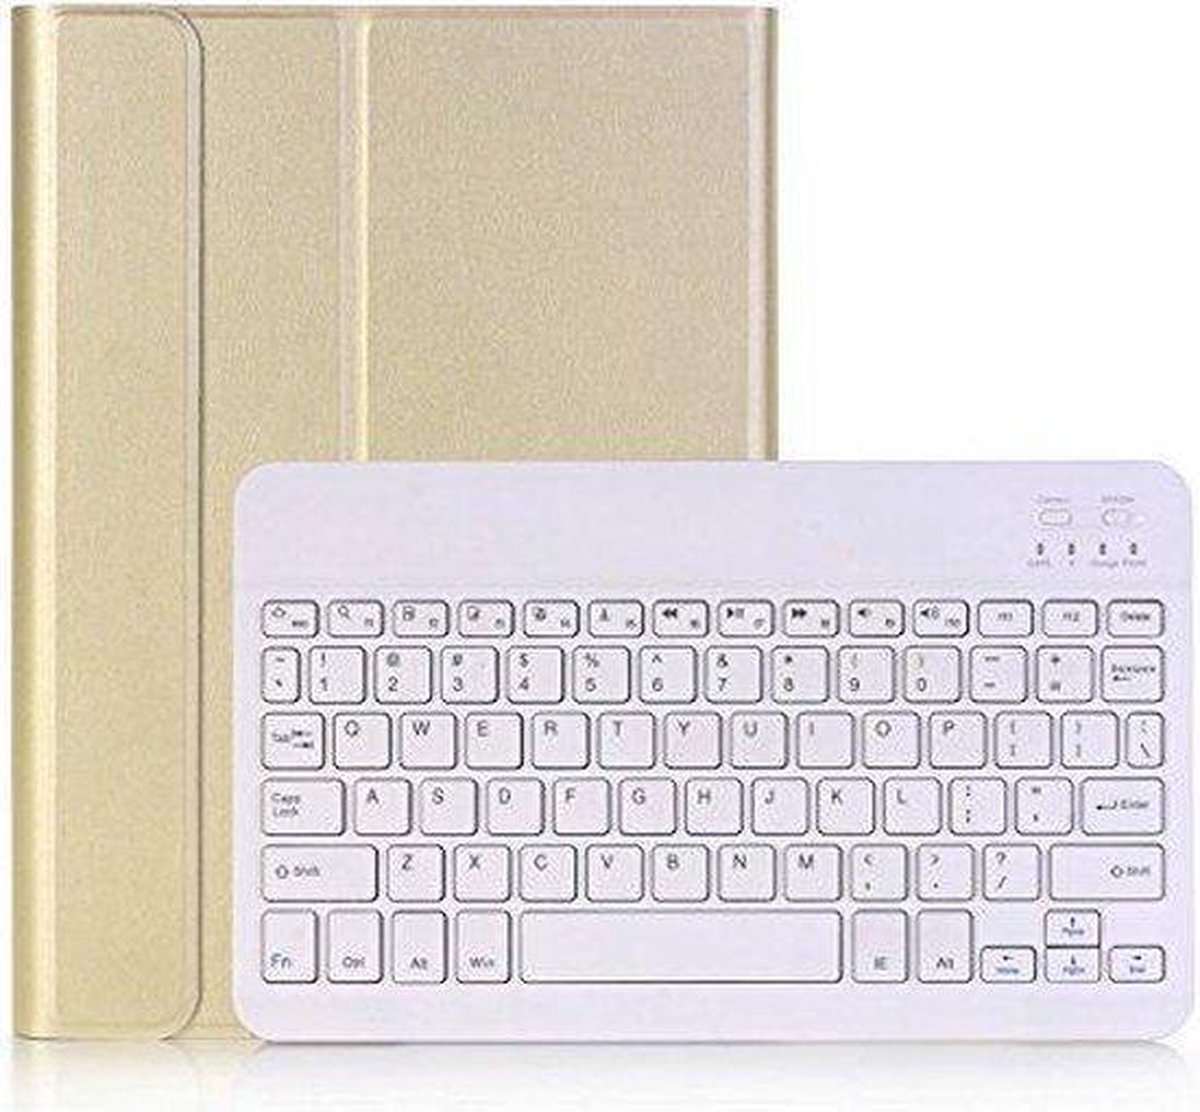 Luxe Smart Tablet Keyboard Case Goud - Tablethoes Voor Apple iPad Air - iPad Air 2 - iPad Pro 9.7